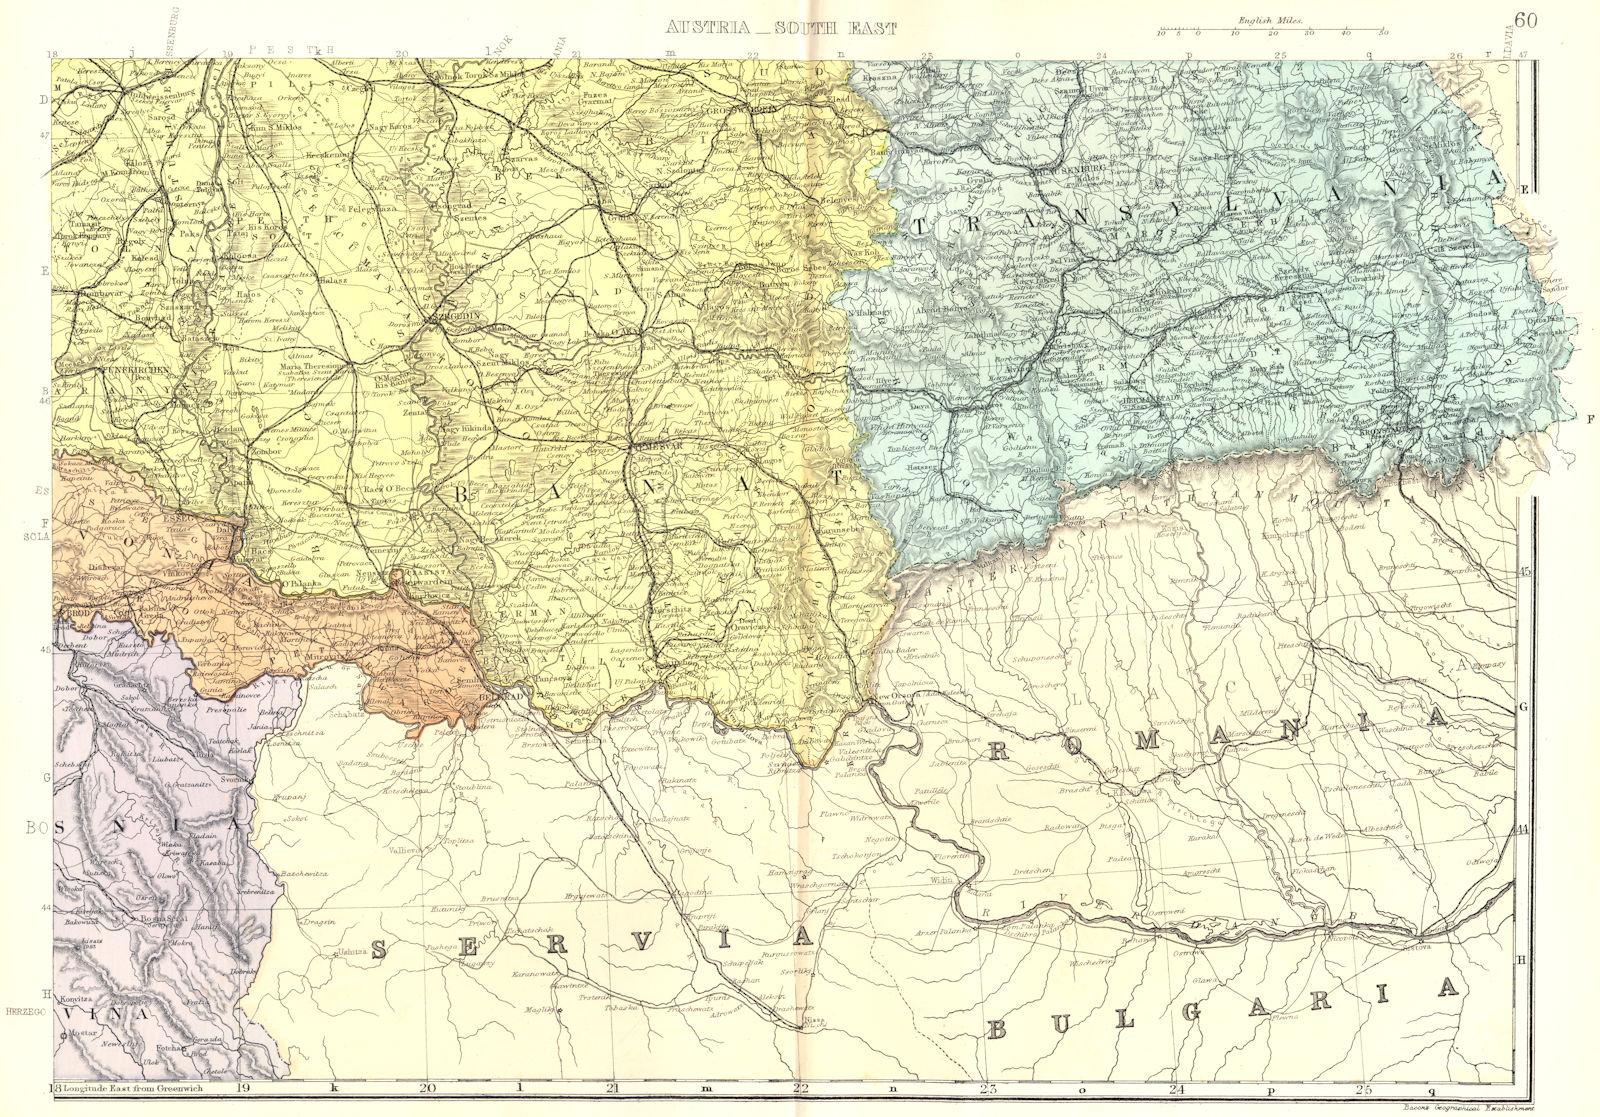 AUSTRIA-HUNGARY SE. Romania Serbia Hungary Croatia Transylvania. Bacon 1895 map